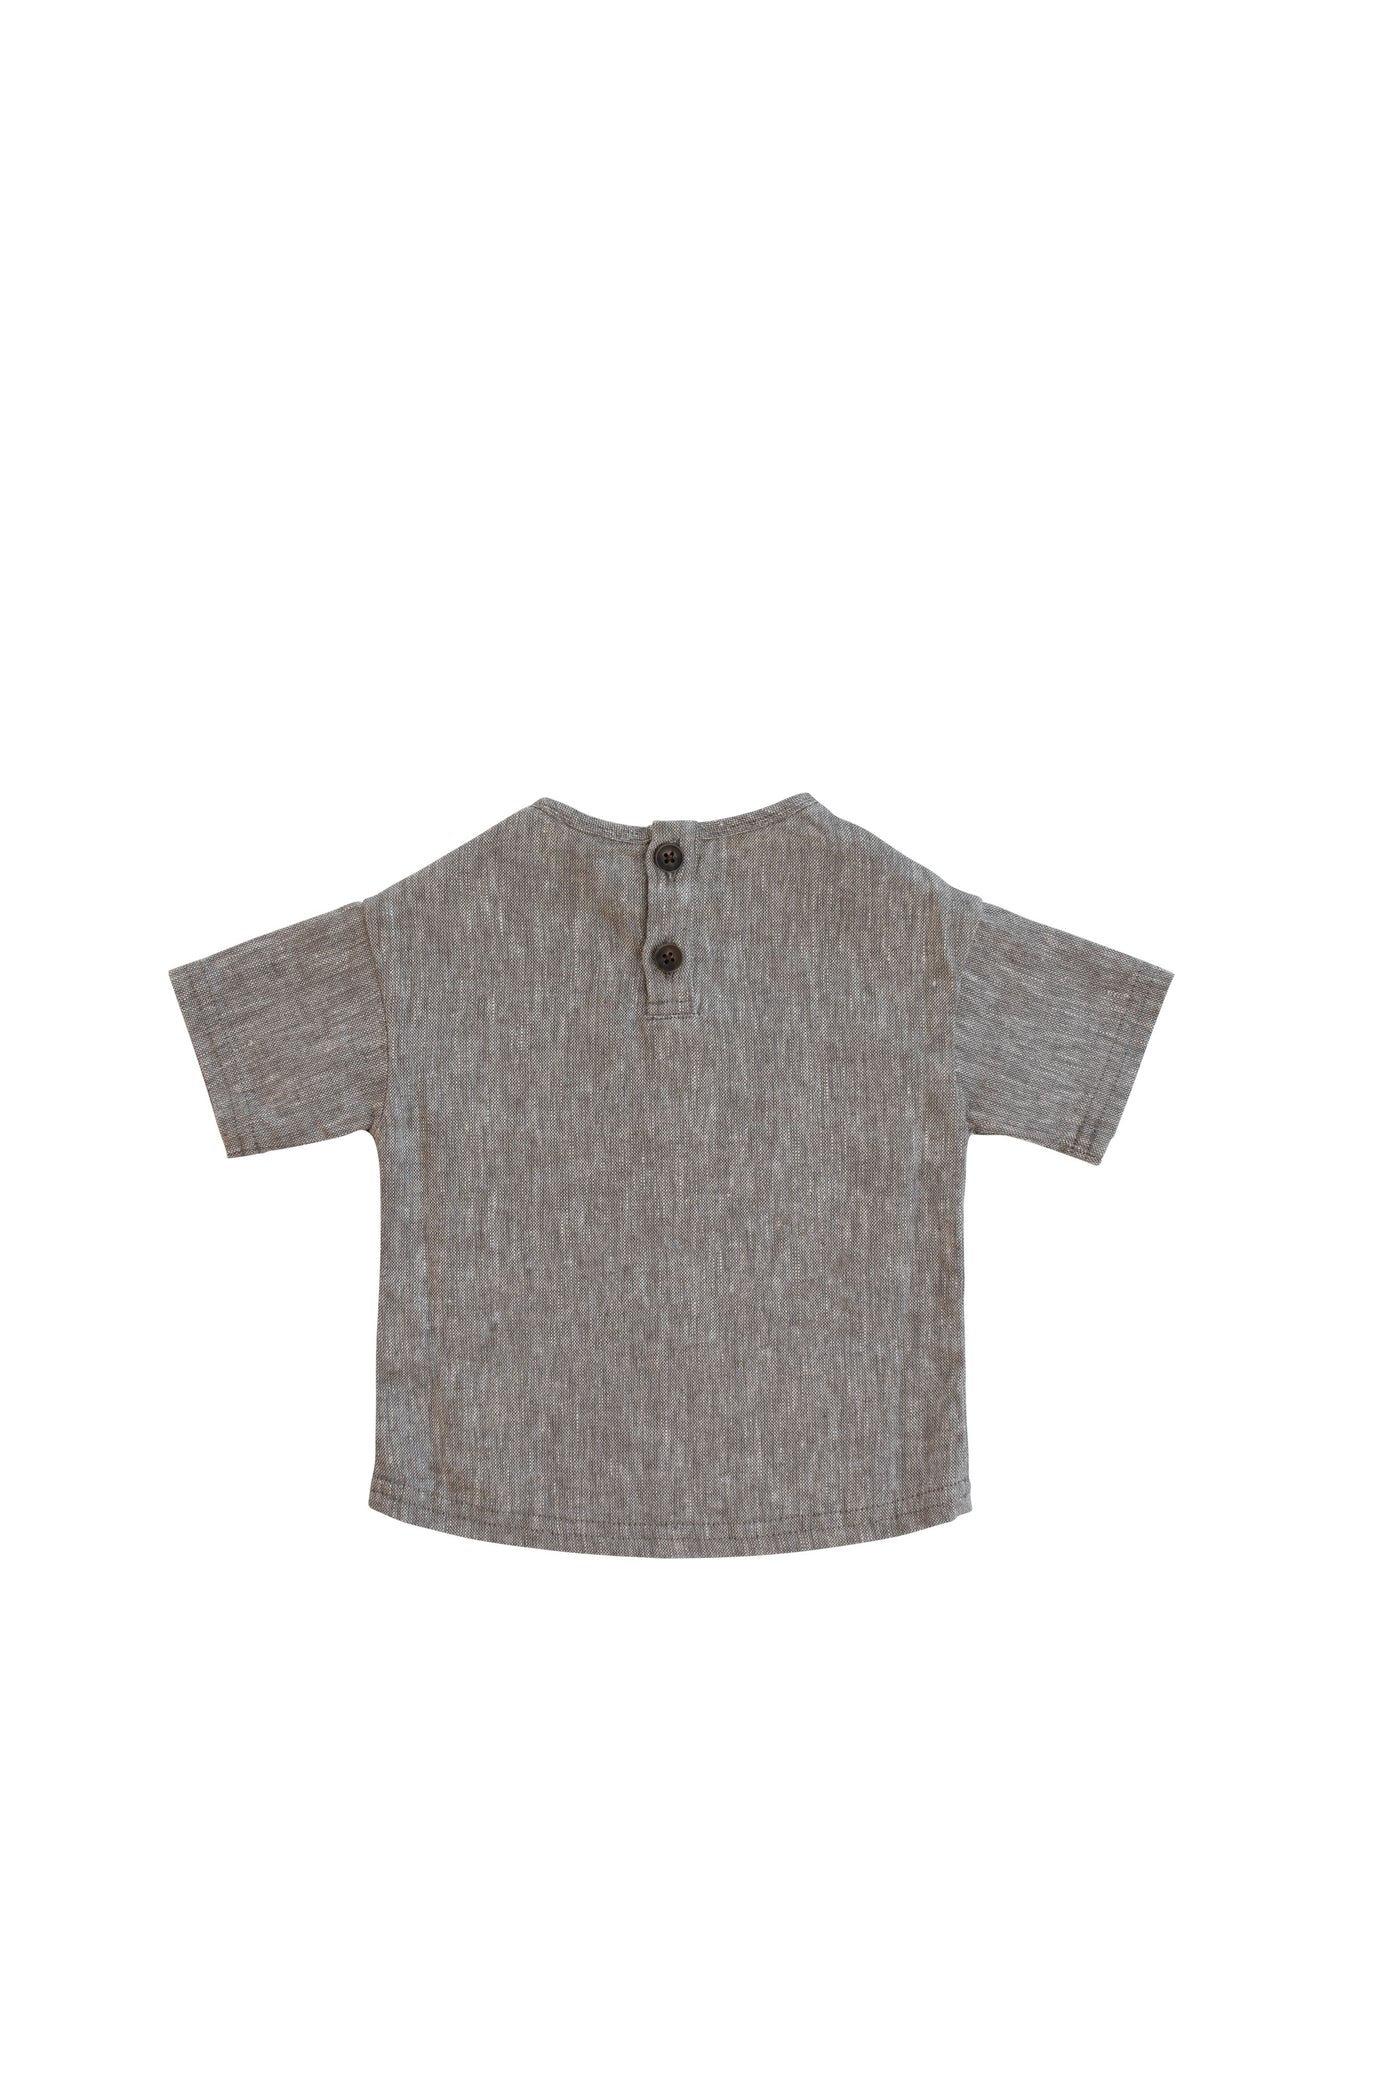 Nolan Top - Fog Short Sleeve T-Shirt Jamie Kay 